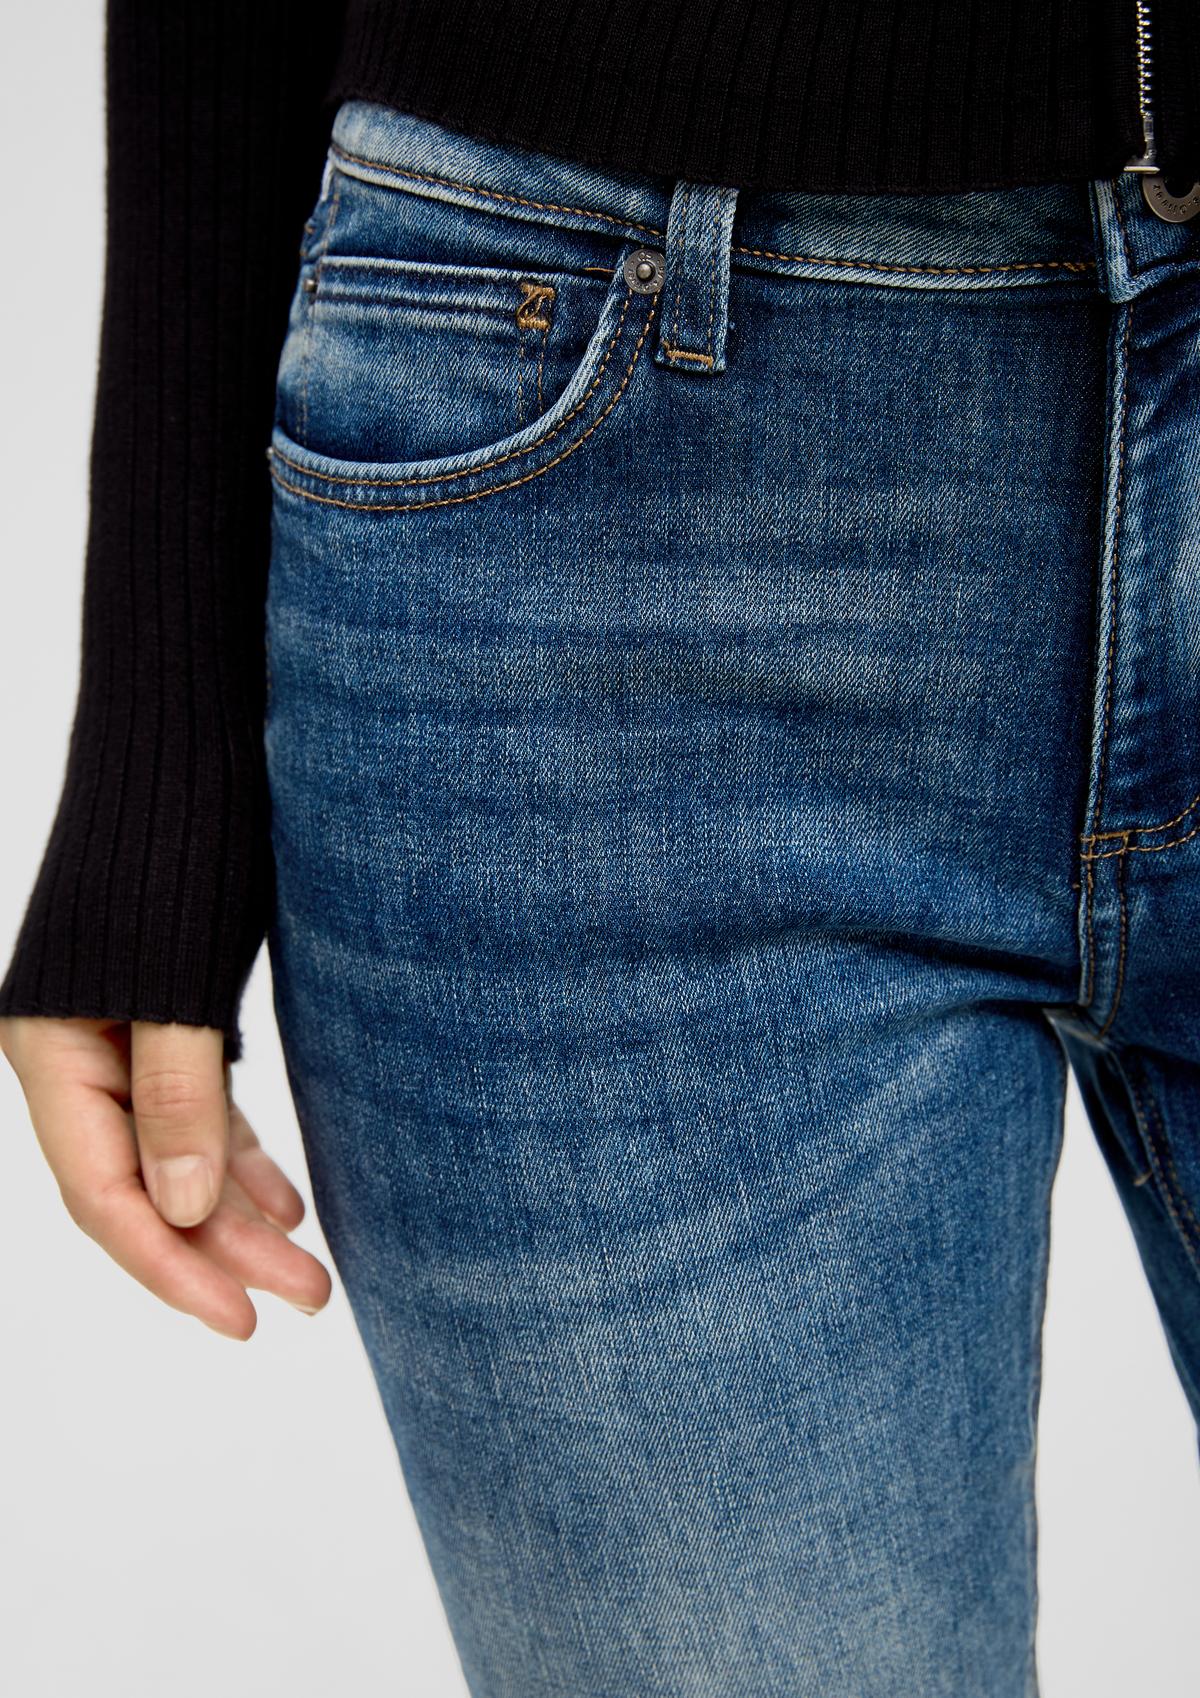 s.Oliver Sadie jeans / slim fit / mid rise / skinny leg / stretch cotton